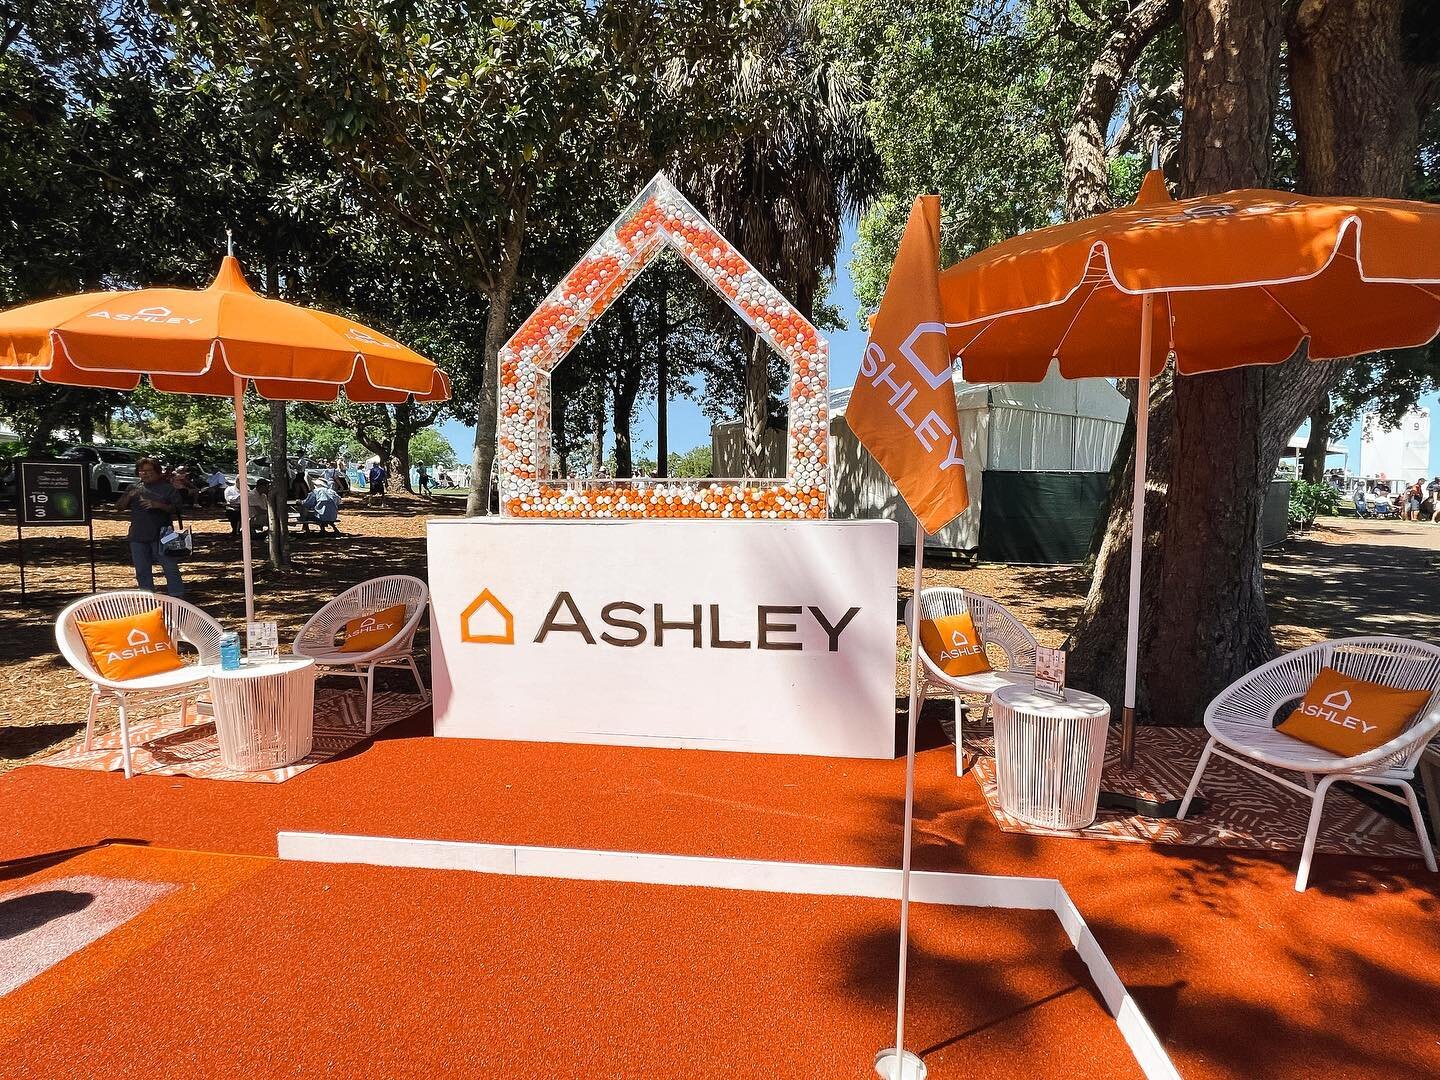 The @ashleyofficial Lounge at @valsparchamp ⛳️ 
&mdash;&mdash;&mdash;
📷 @arcilect 
&mdash;&mdash;&mdash;
#oroeventco #ashley #pga #valspar #golf #experiential #experientialevents #eventplanner #eventdesigner #tampa #picoftheday #pgatour #myashleyhom